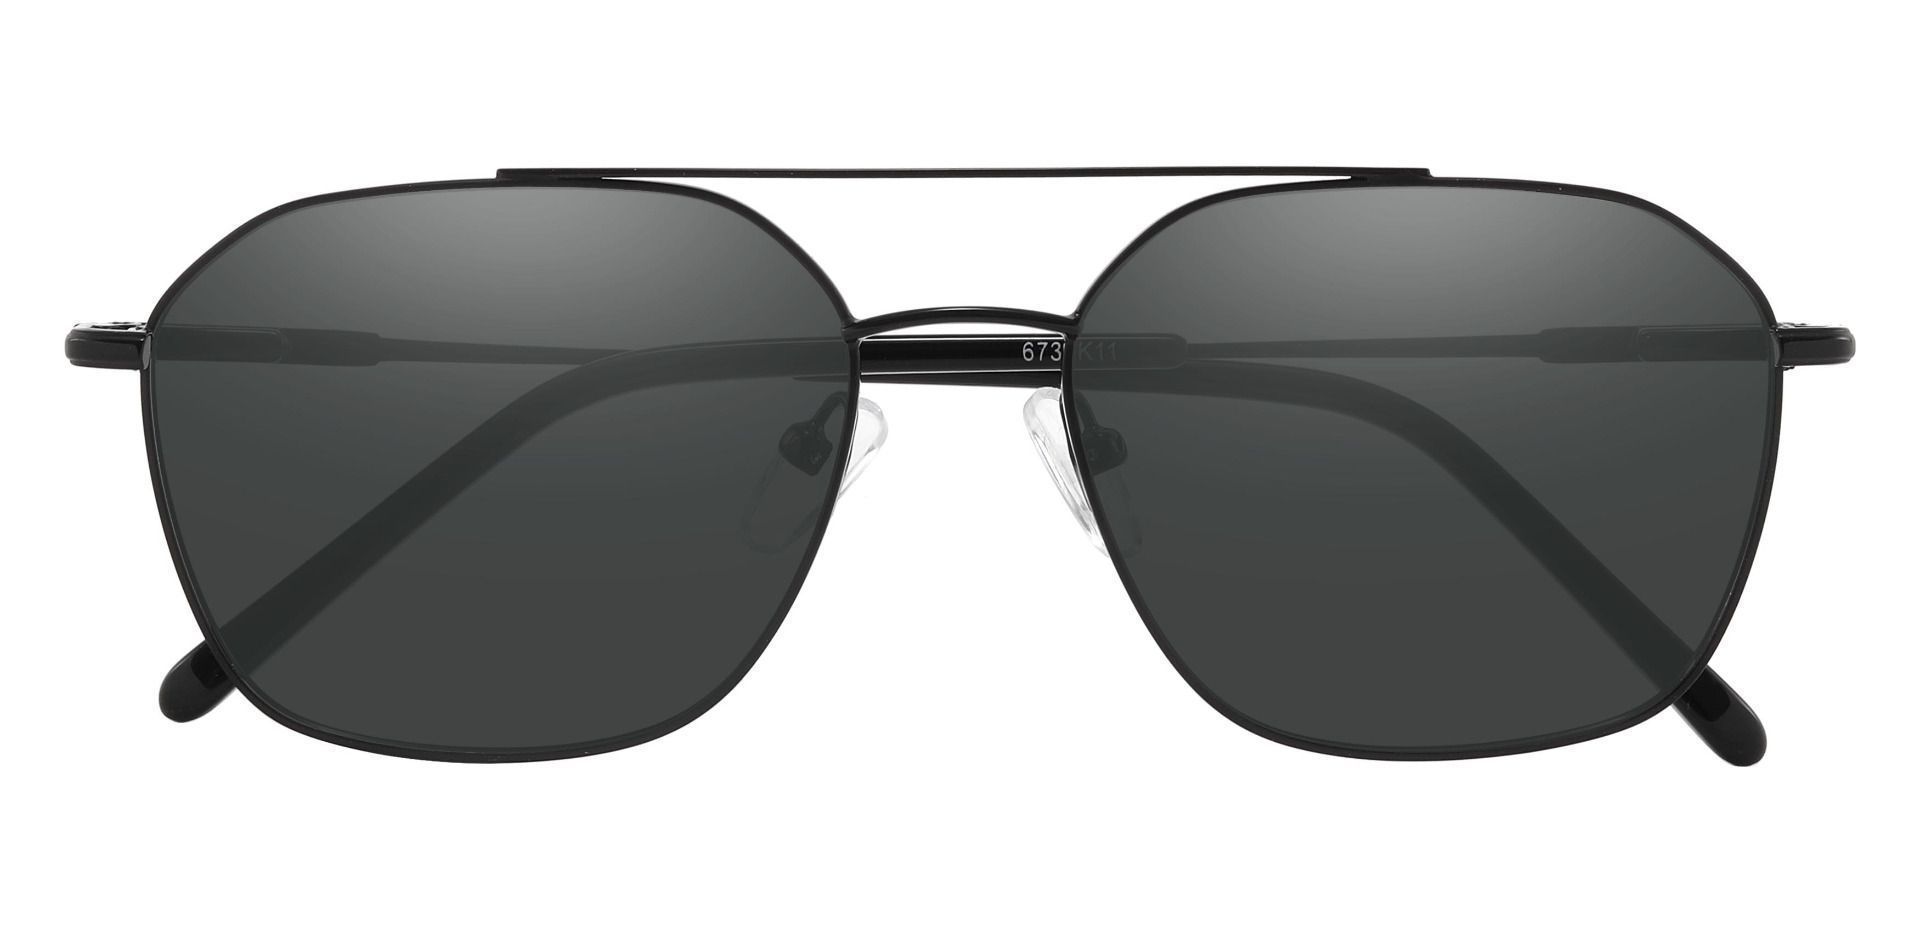 Harvey Aviator Lined Bifocal Sunglasses - Black Frame With Gray Lenses